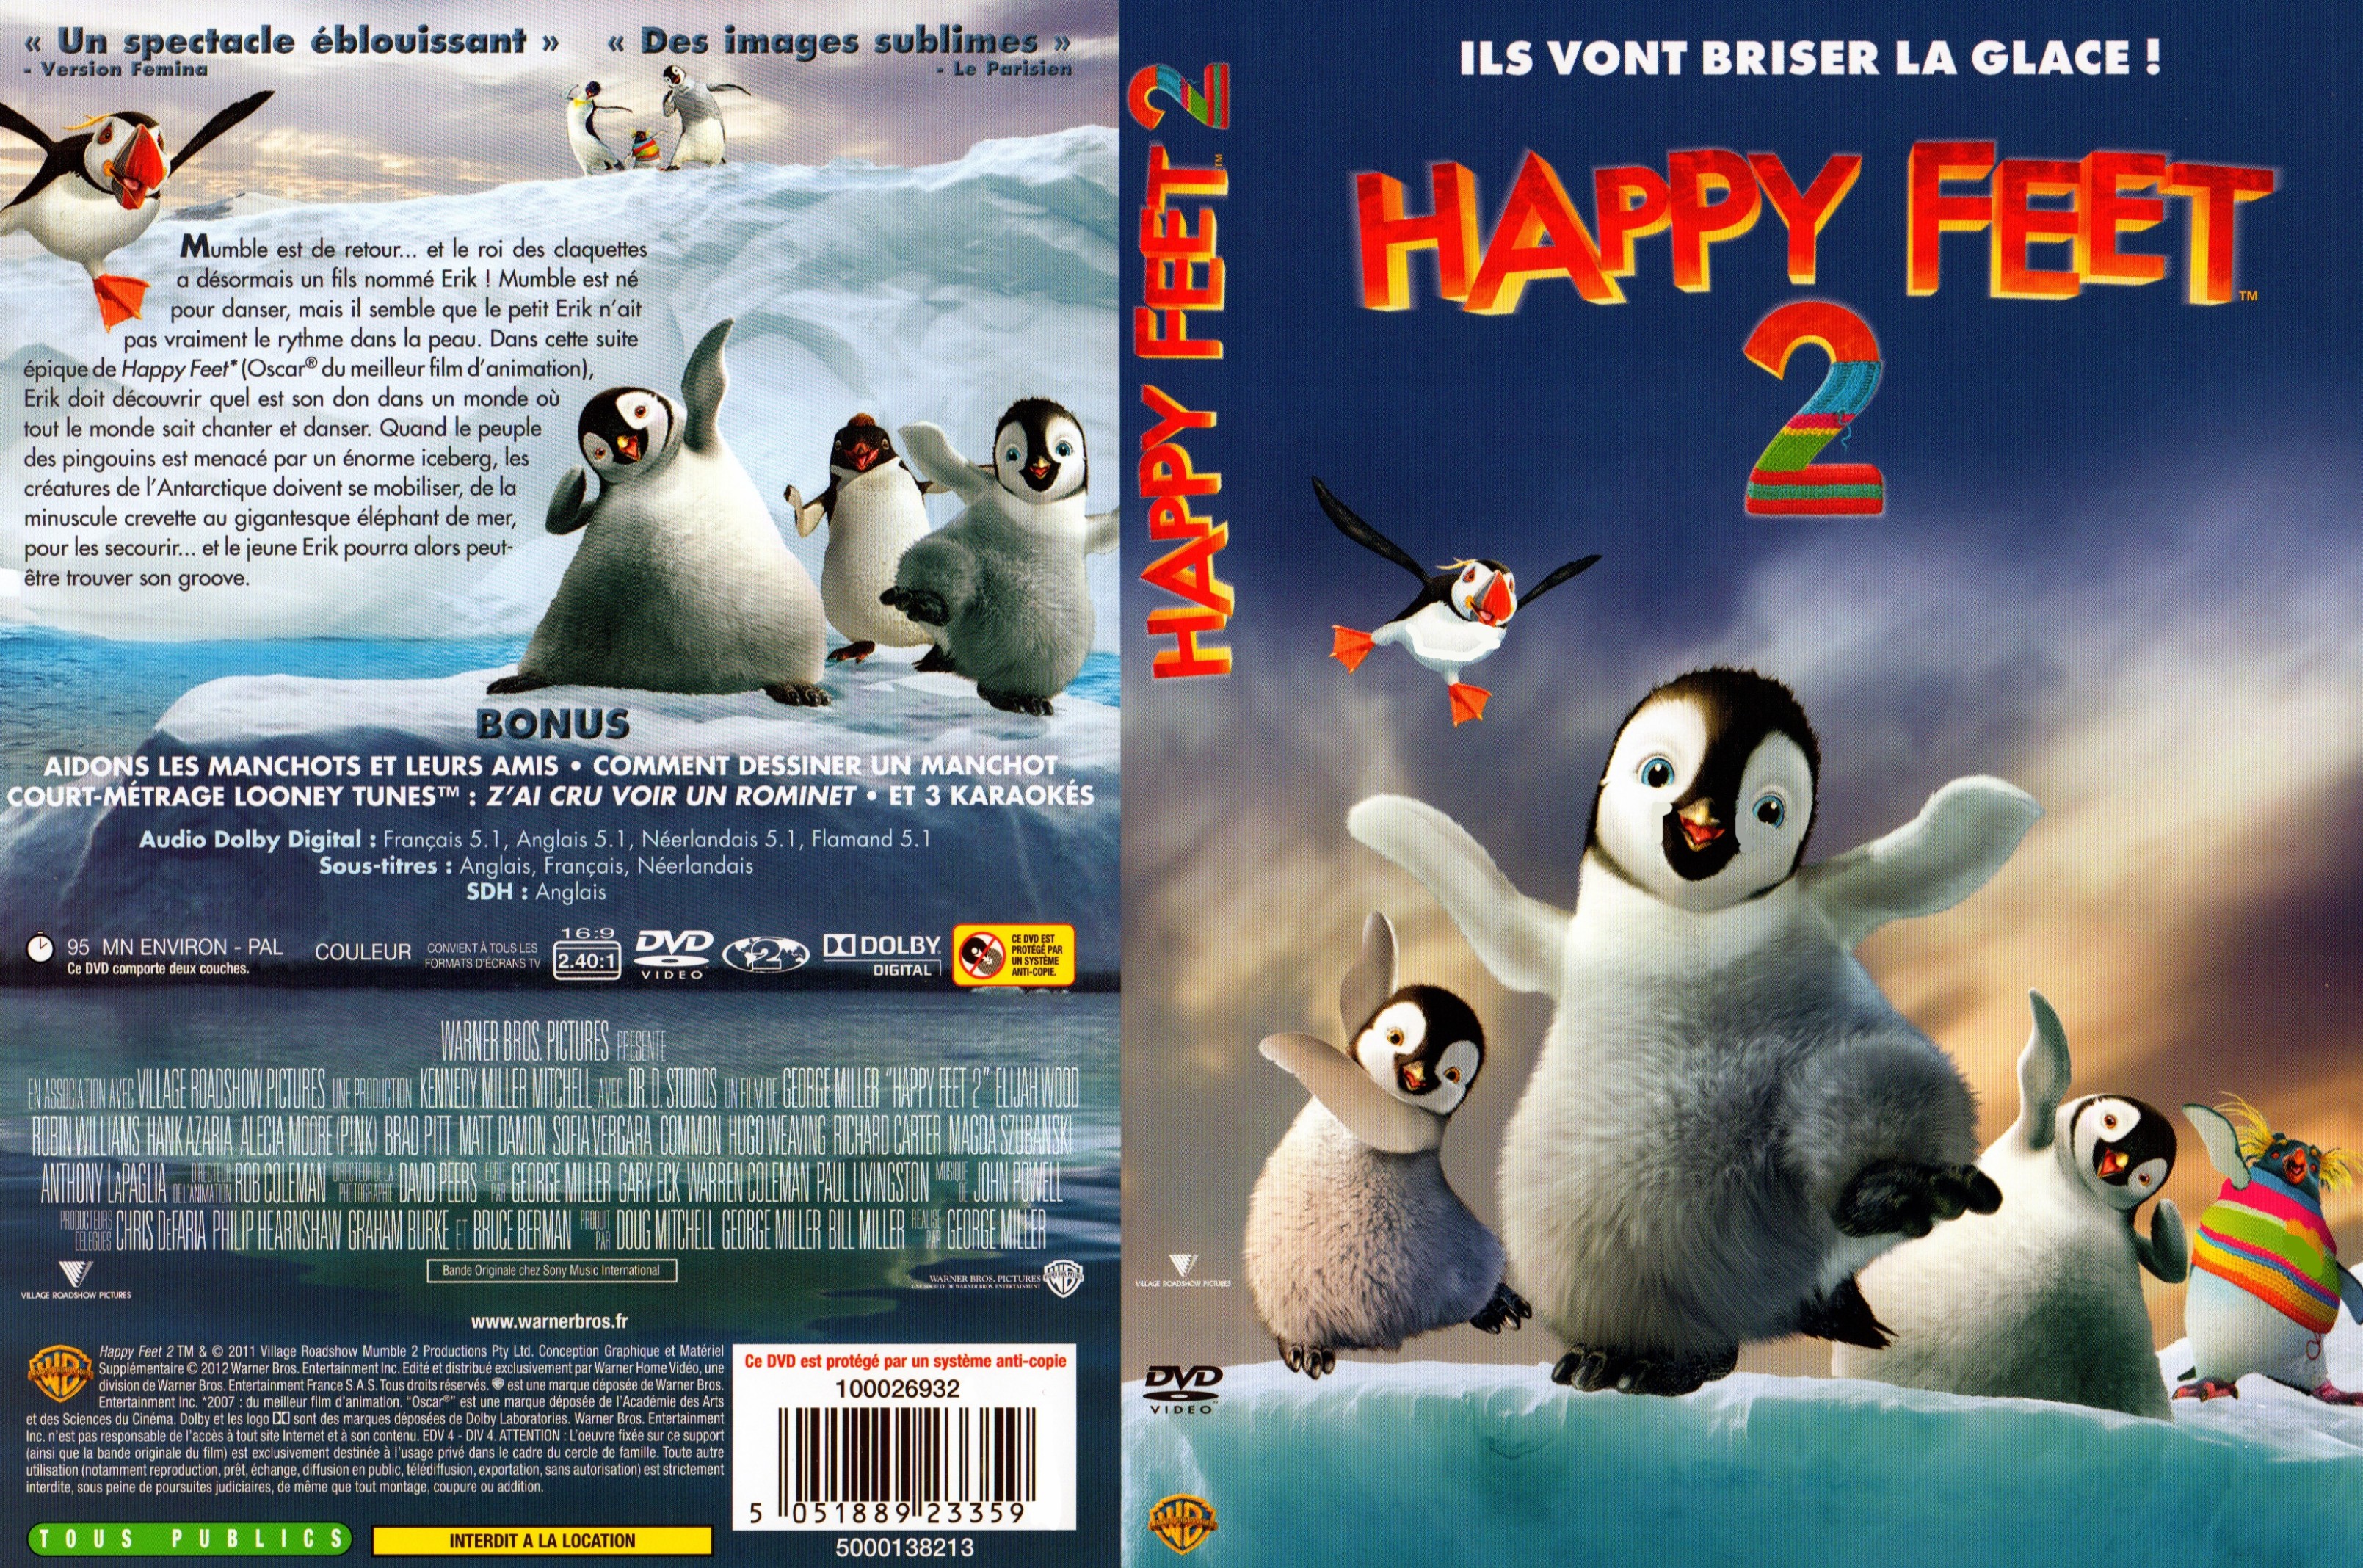 Jaquette DVD Happy Feet 2